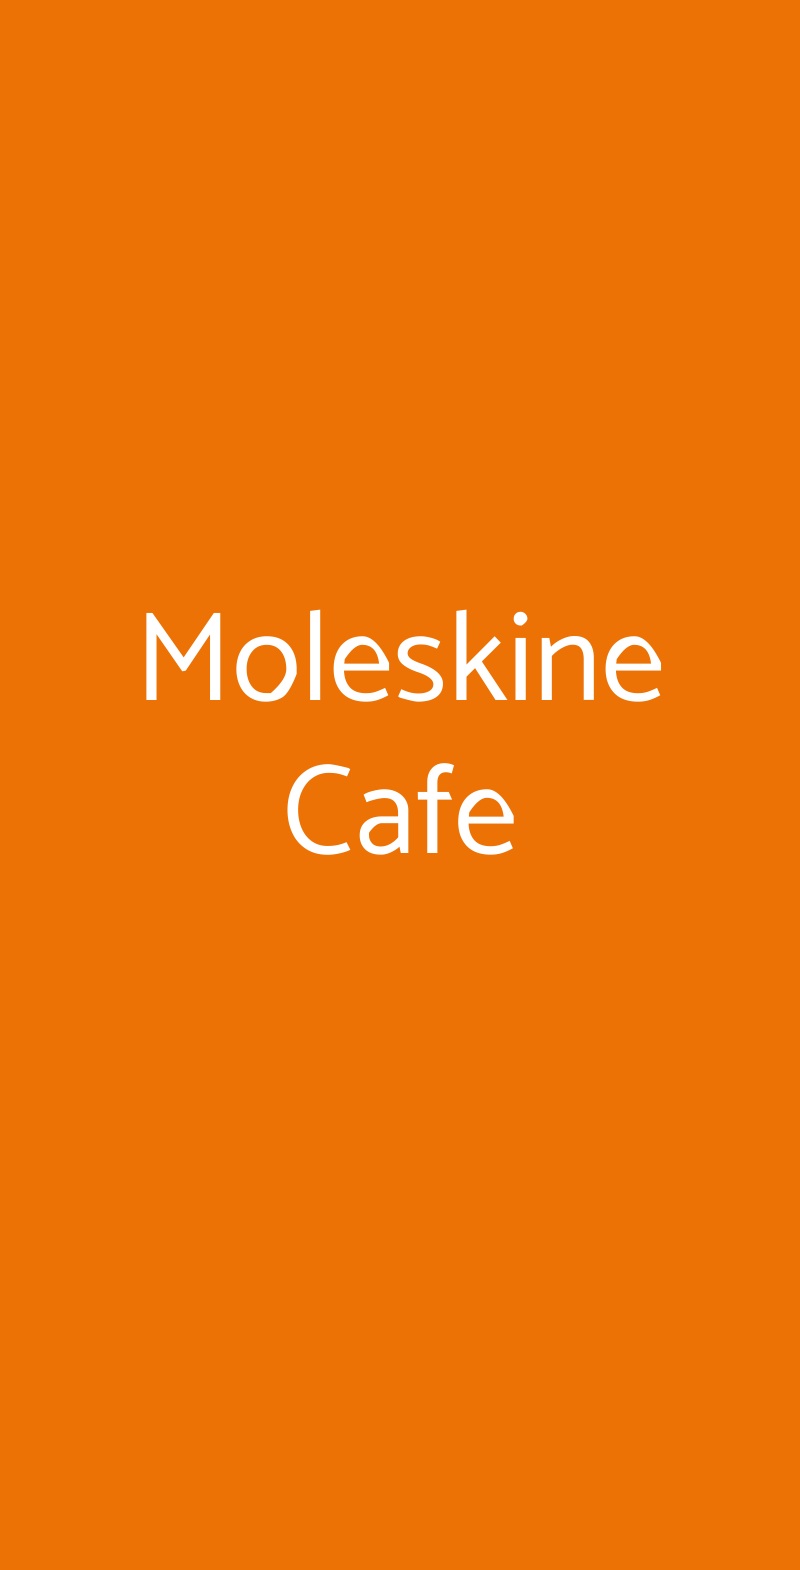 Moleskine Cafe Milano menù 1 pagina